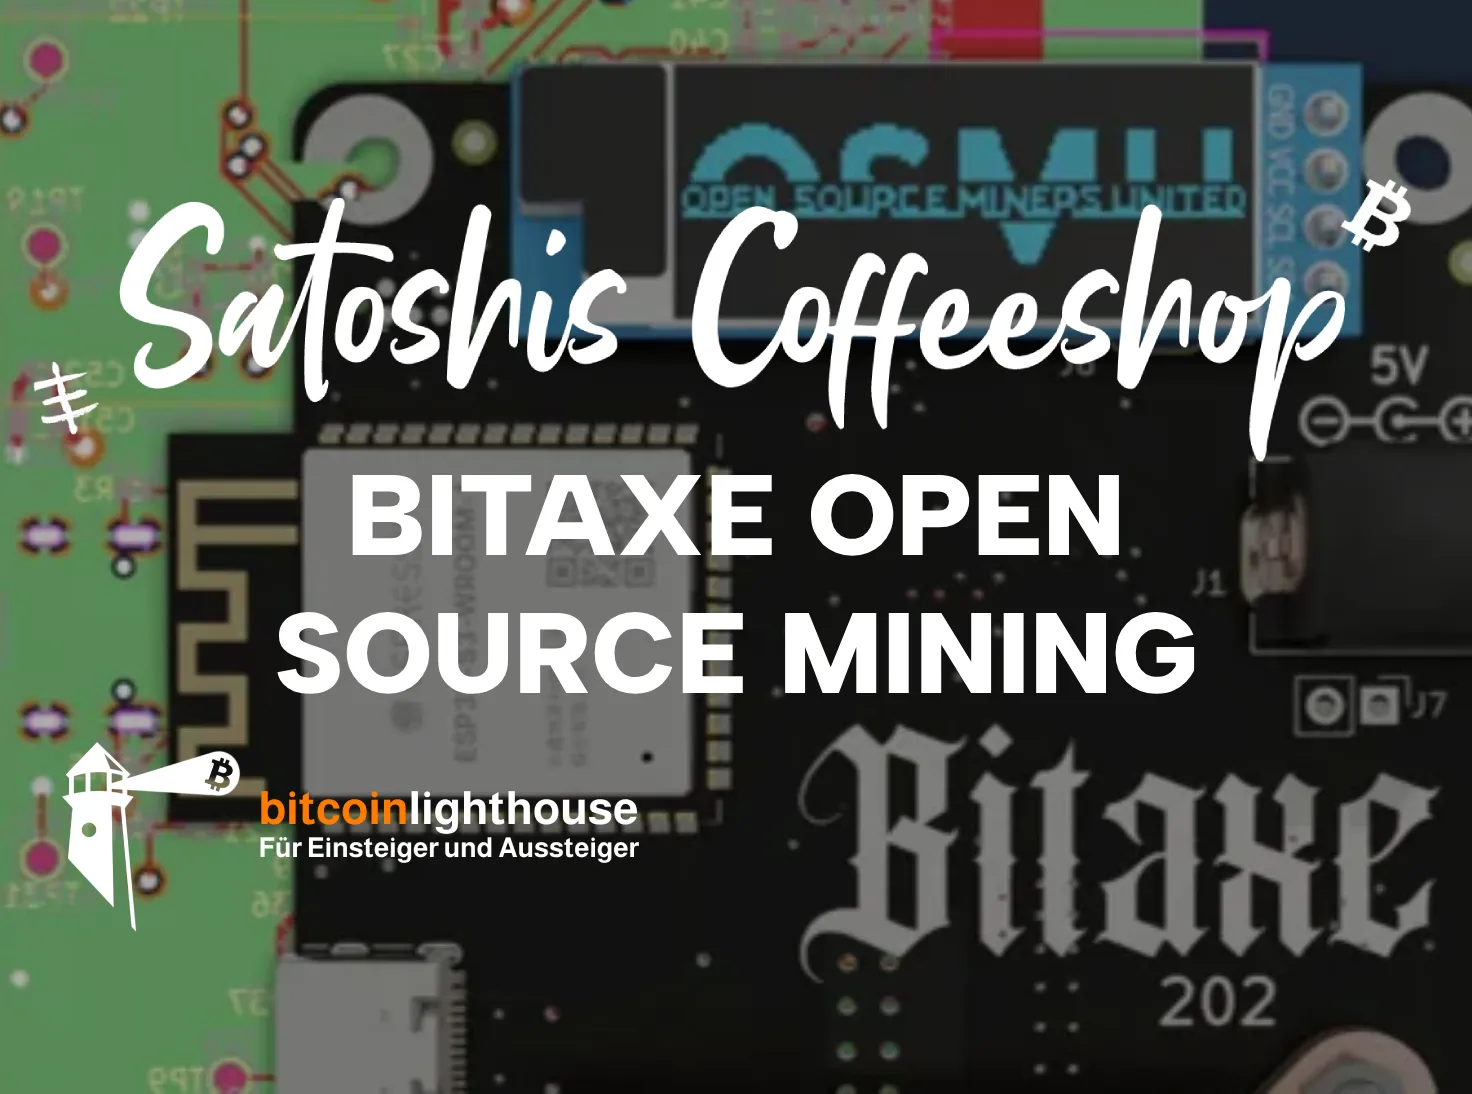 Bitaxe Open Source Mining in Satoshis Coffeeshop